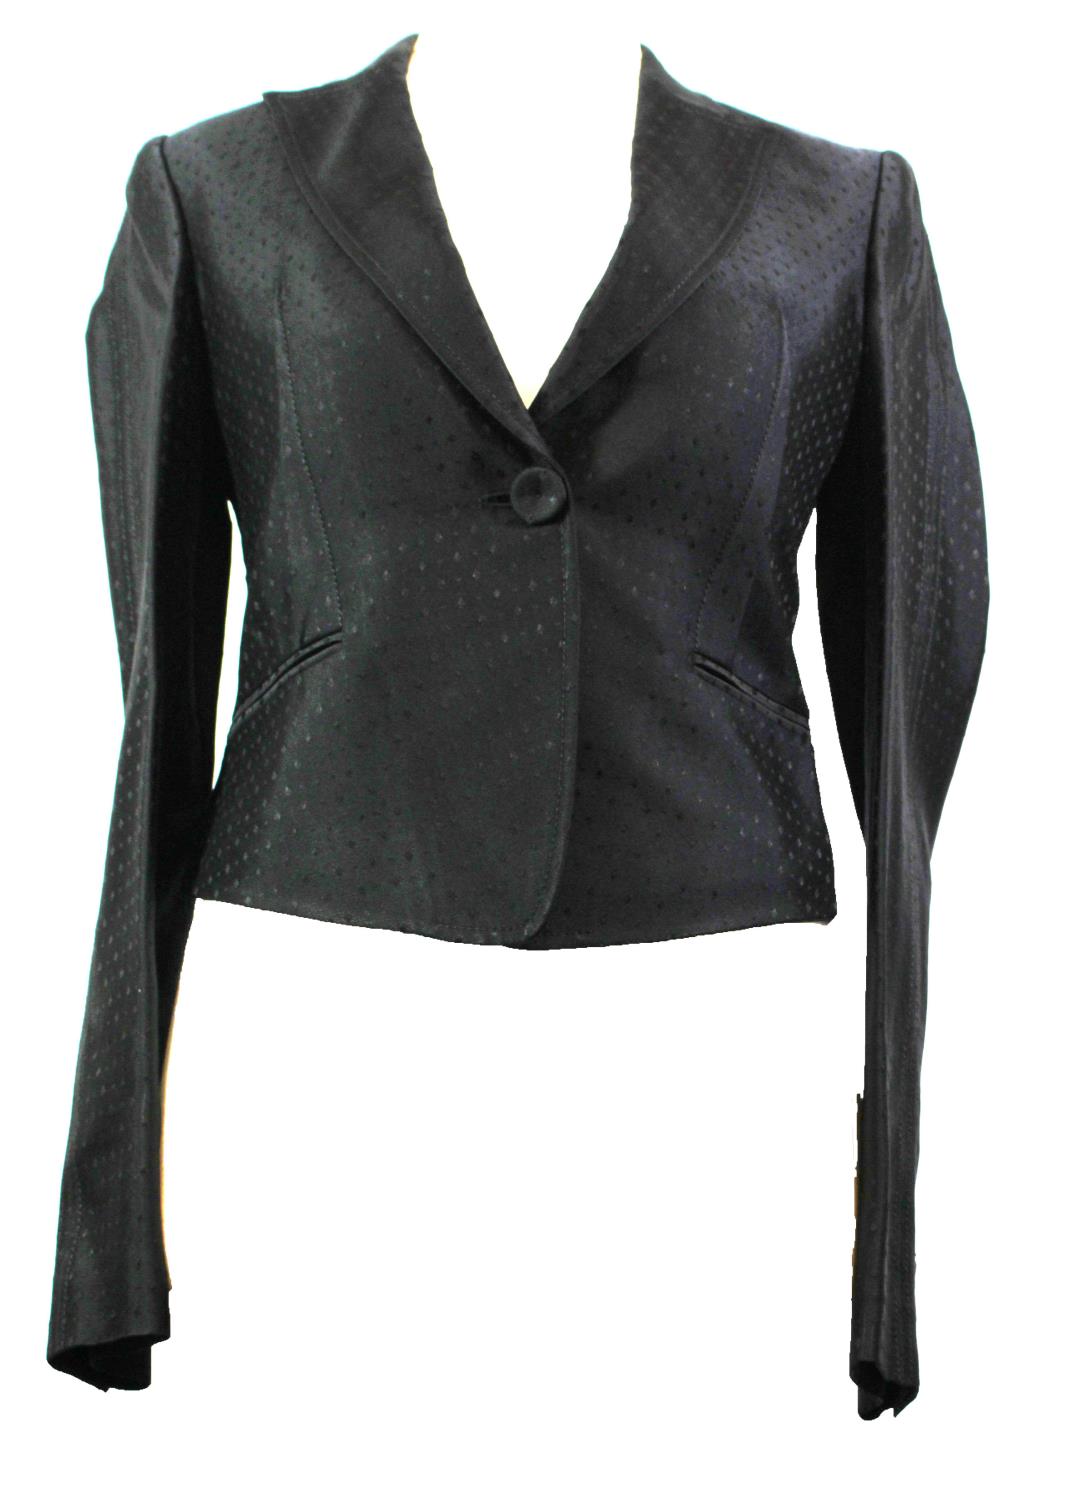 STELLA MCCARTNEY, BLACK 'SILK' BLAZER With peak lapel collar, textured small diamond design, long